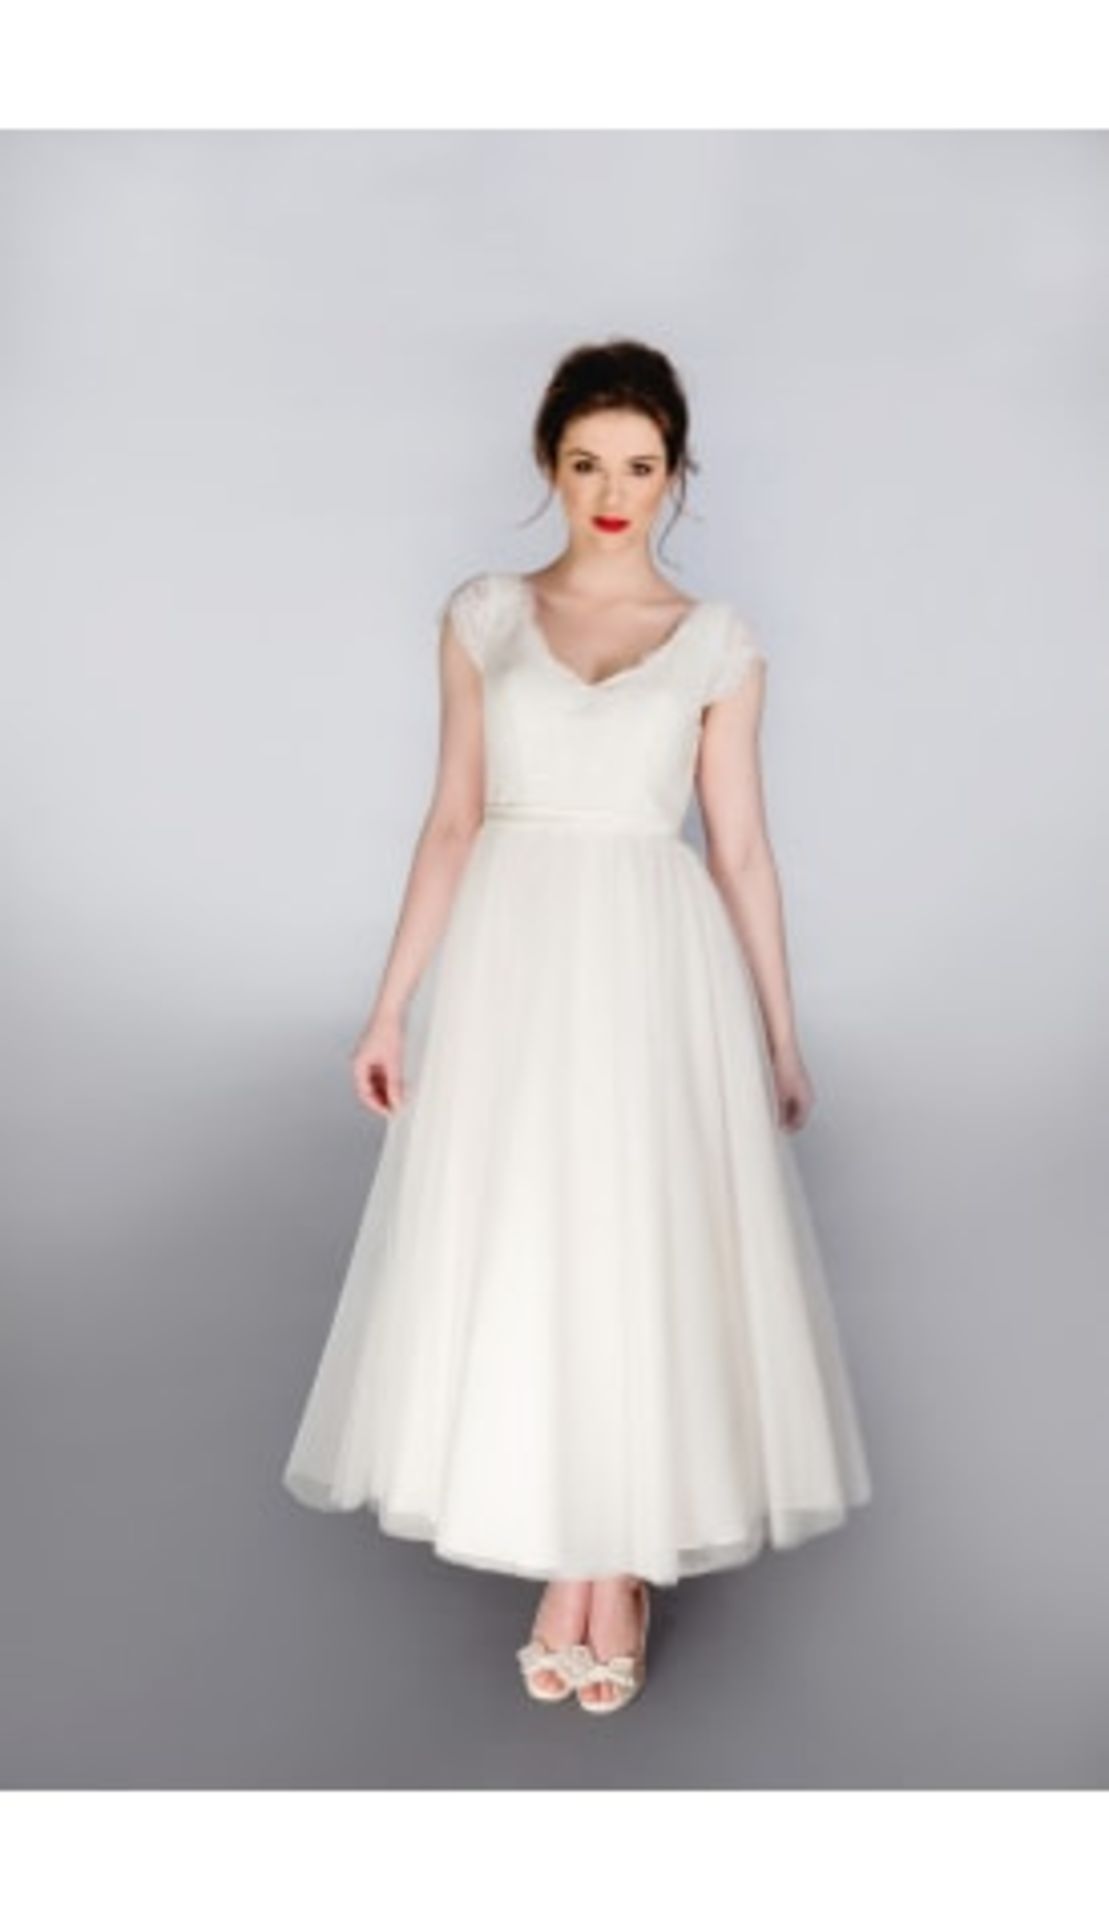 No VAT!! RRP CIRCA £800! Vintage Inspired Designer Wedding Dress in Ivory size 14. Brand New